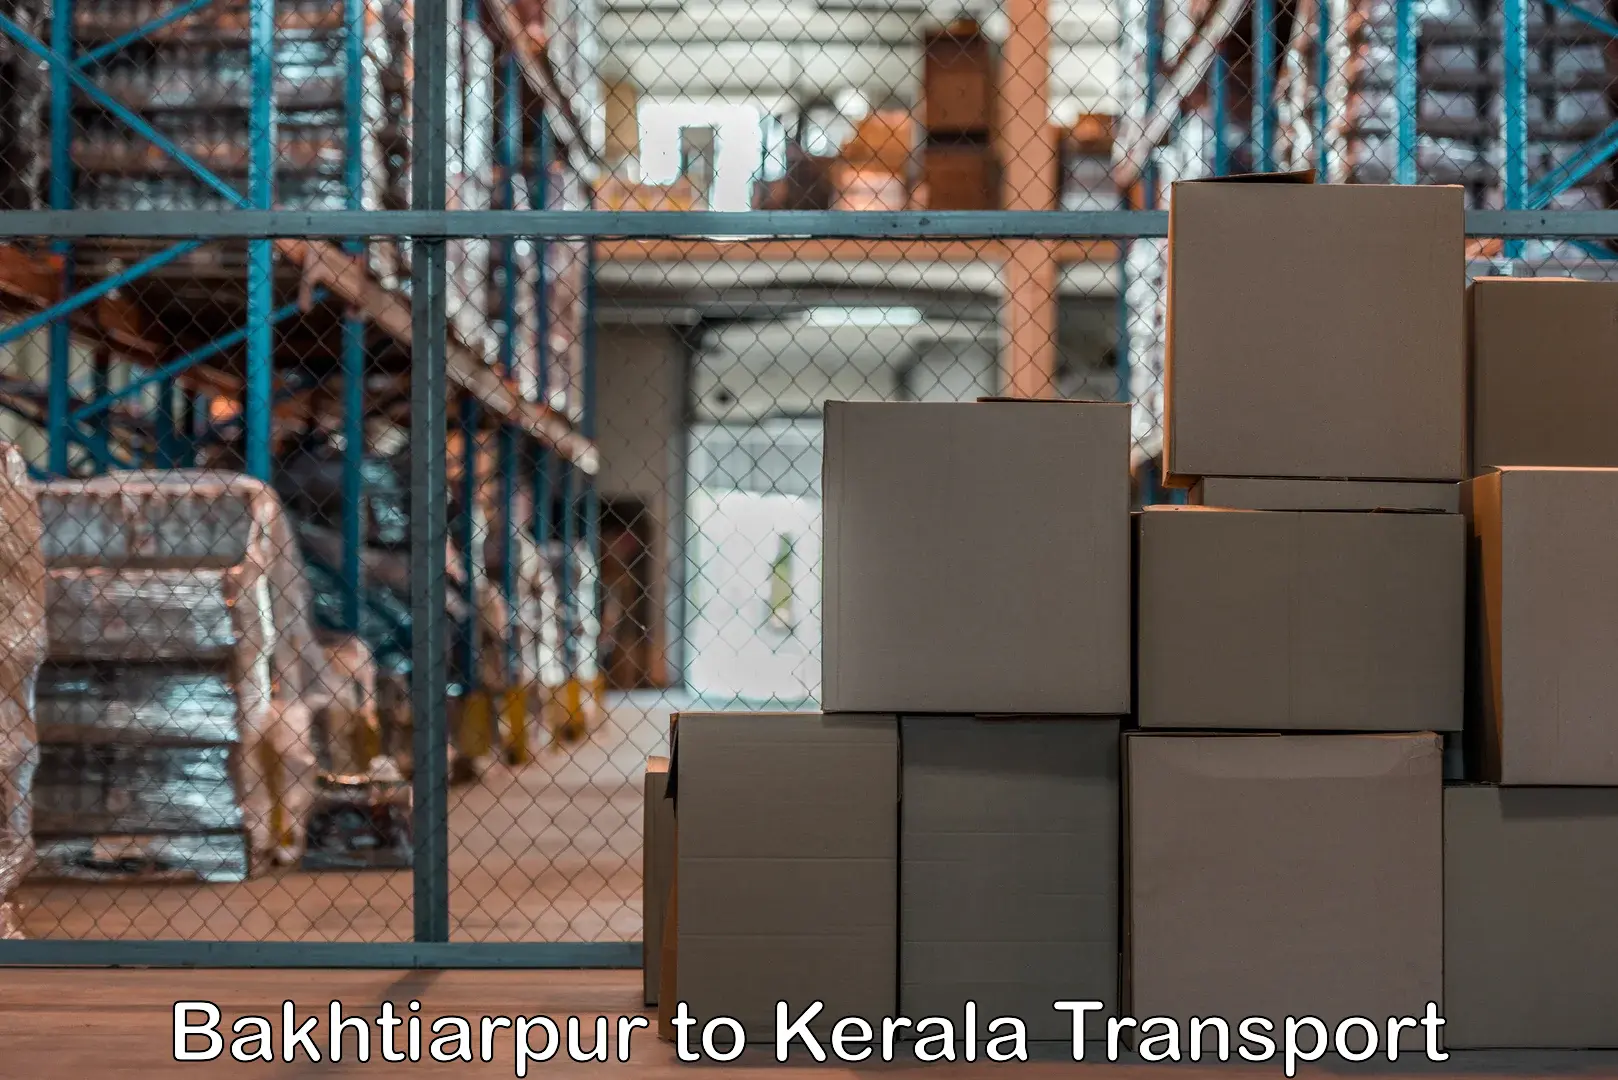 Delivery service Bakhtiarpur to Kollam